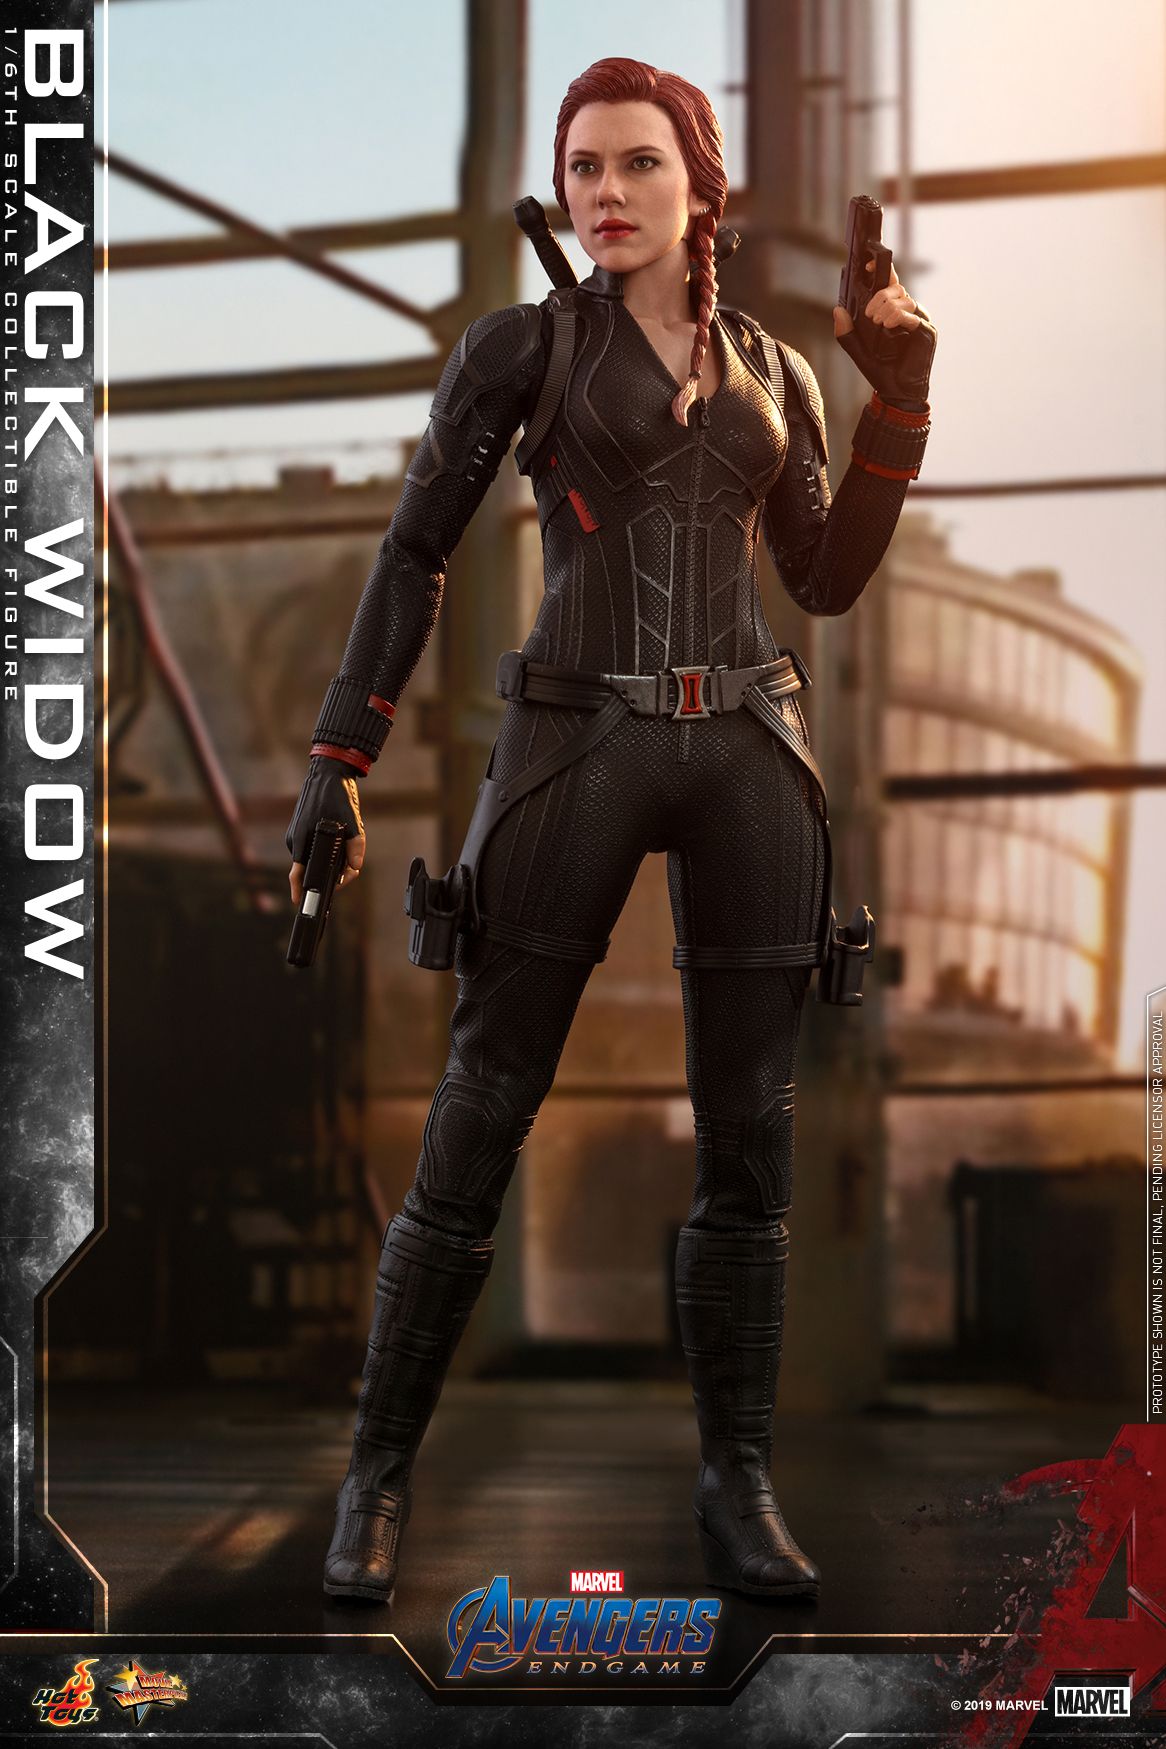 Hot Toys Avengers 4 Black Widow Collectible Figure_pr1